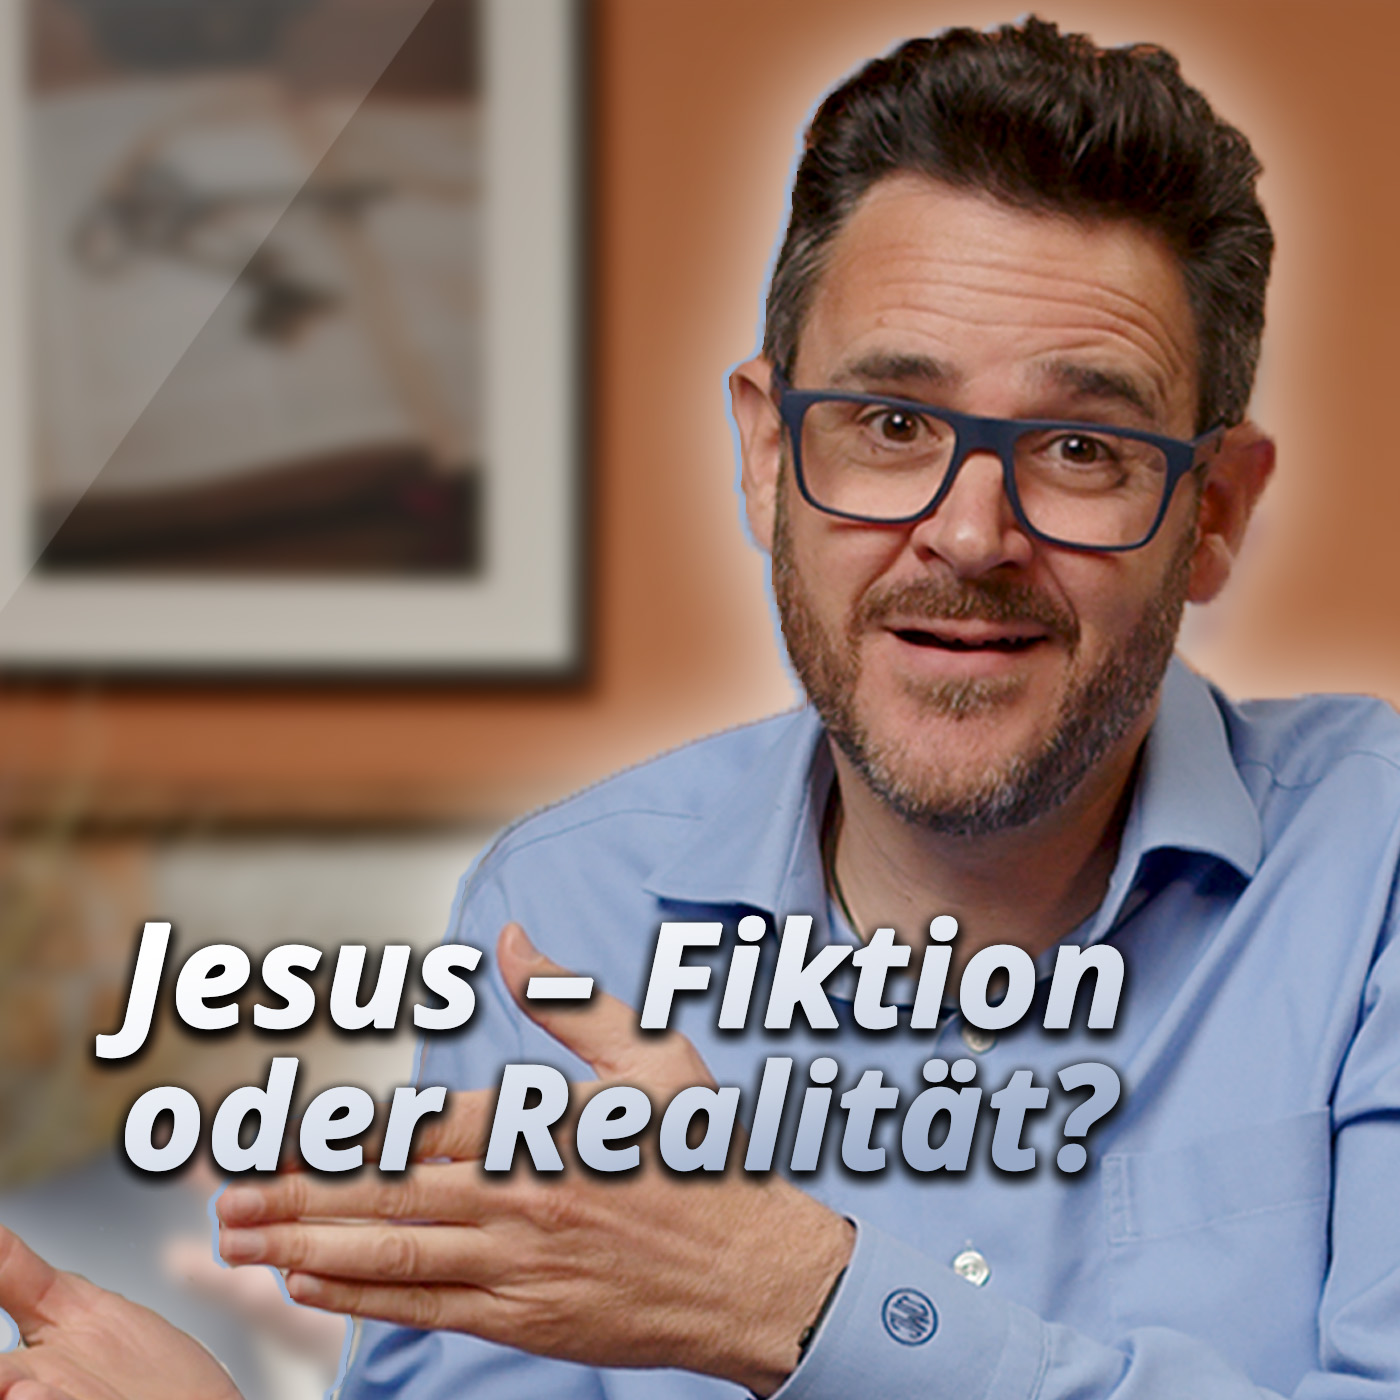 Jesus - Fiktion oder Realität